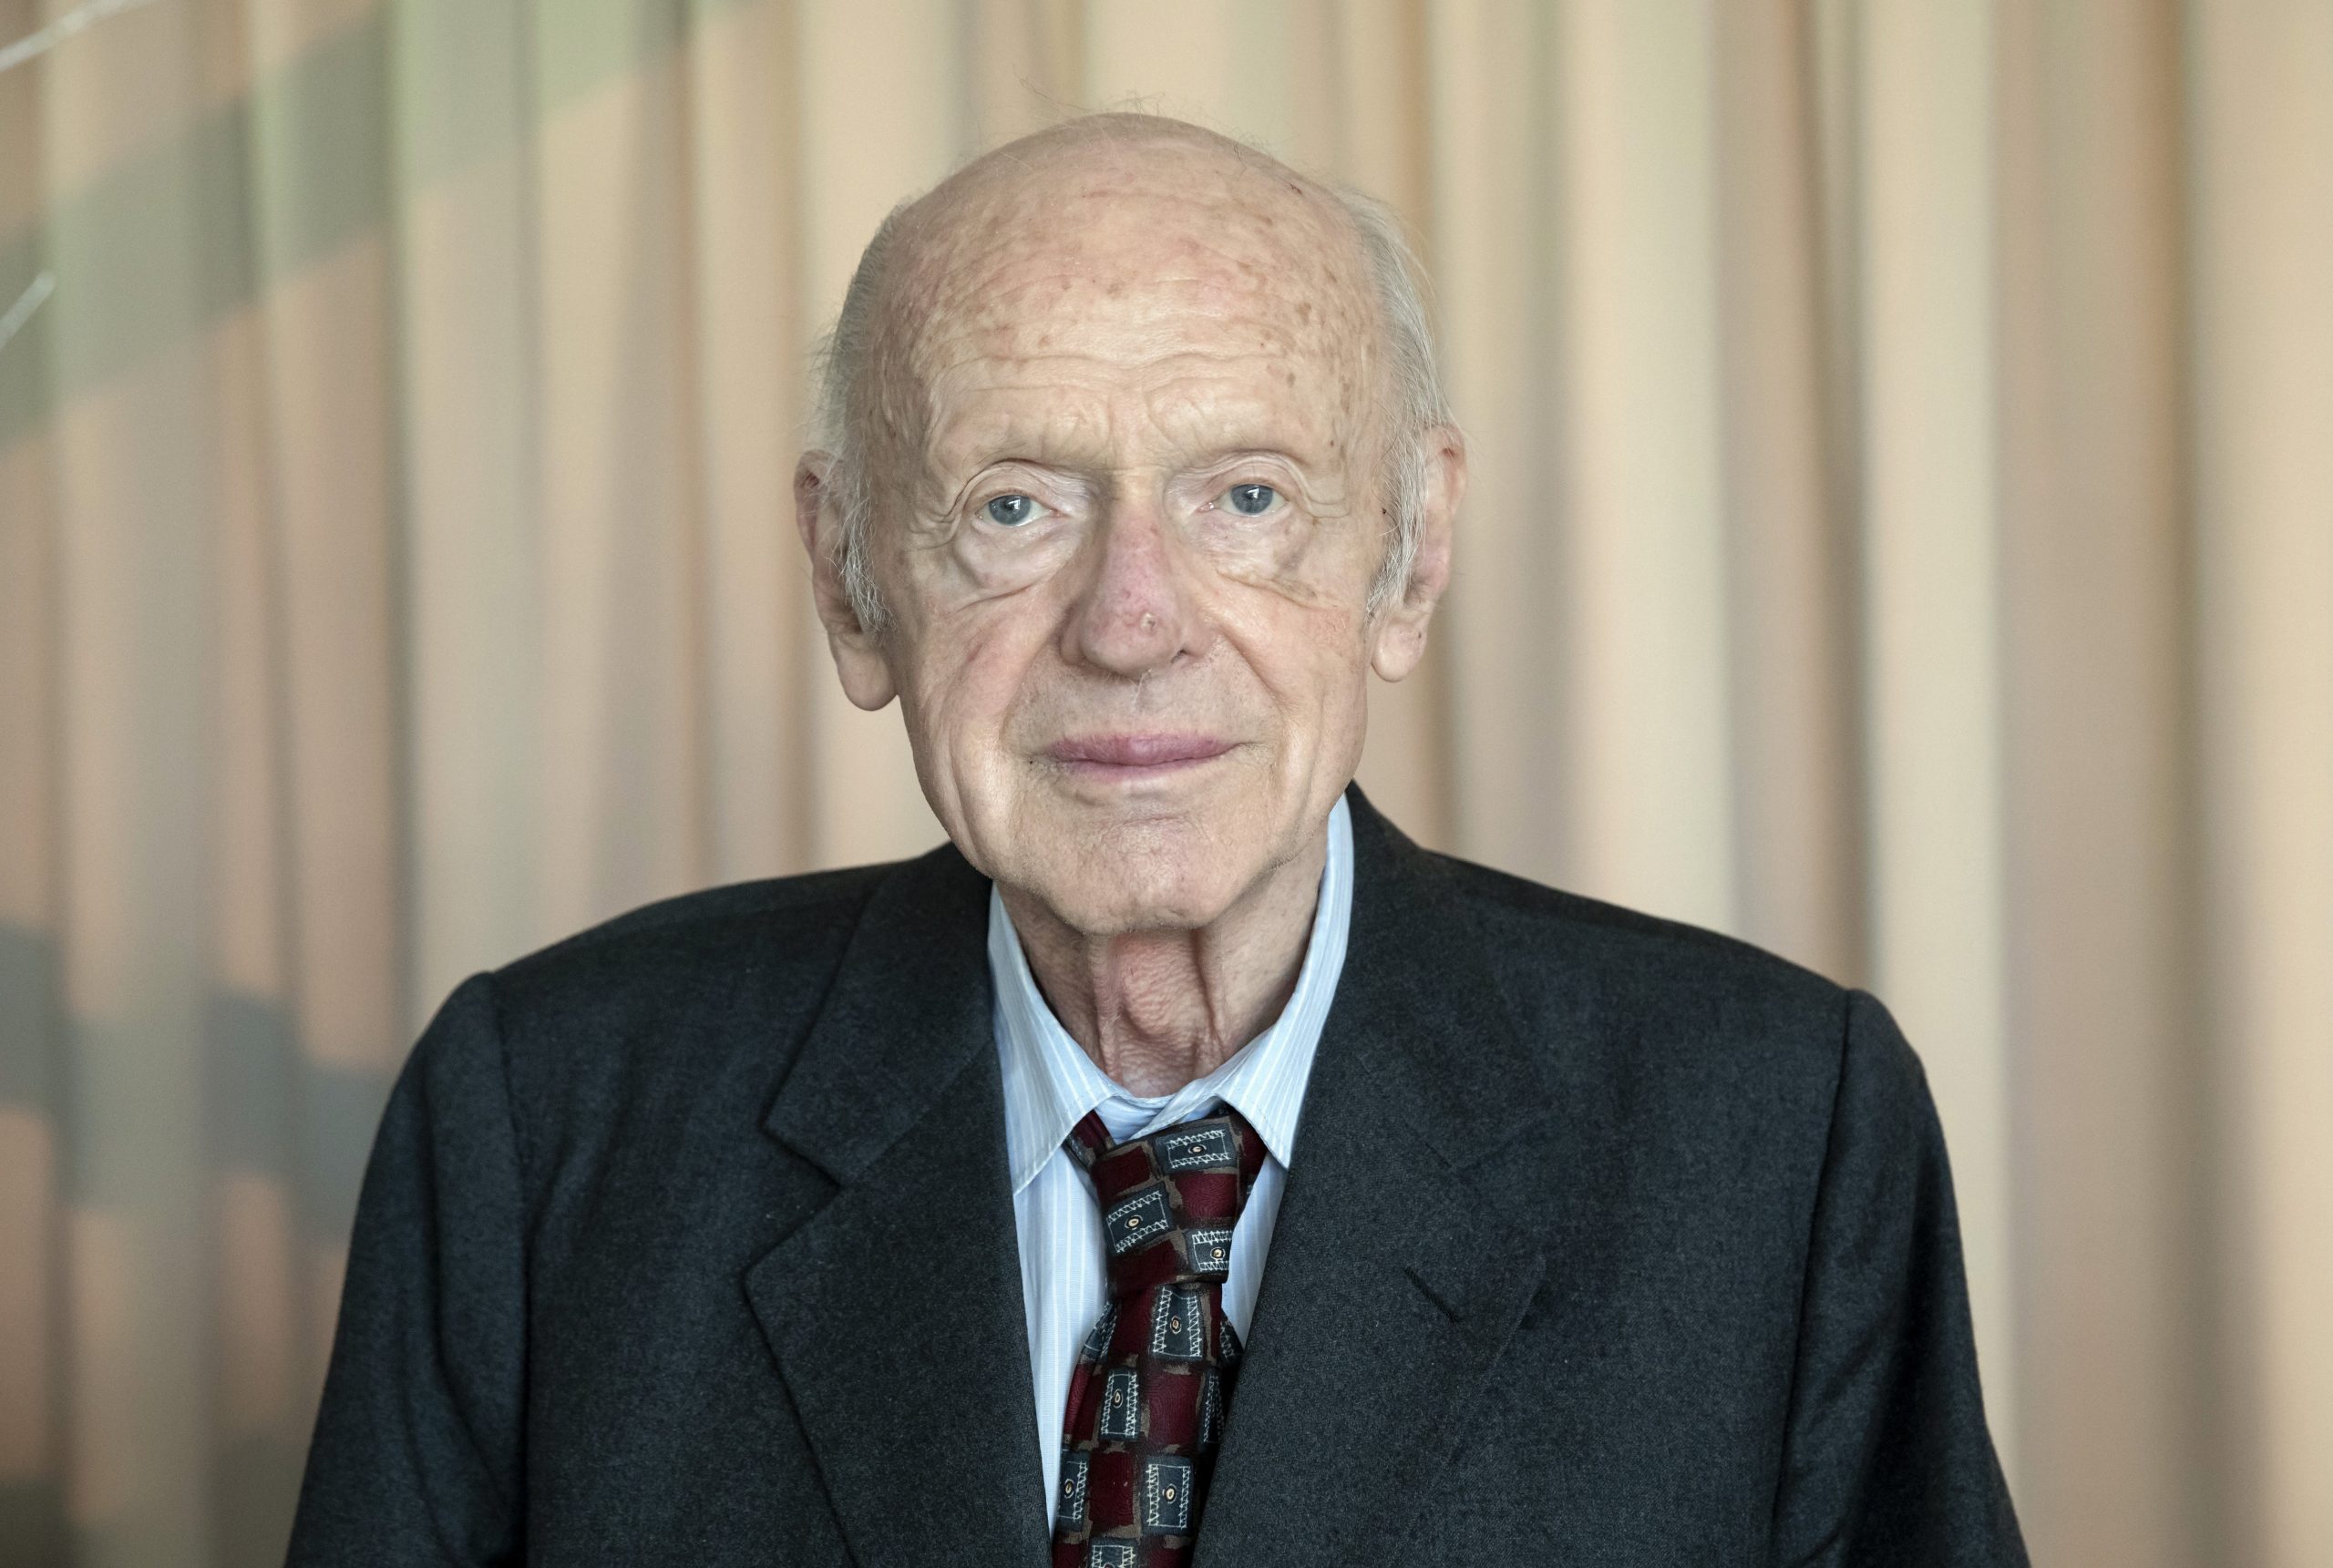 József Halzl, Honorary Life Chairman of Rákóczi Association Dies at 86